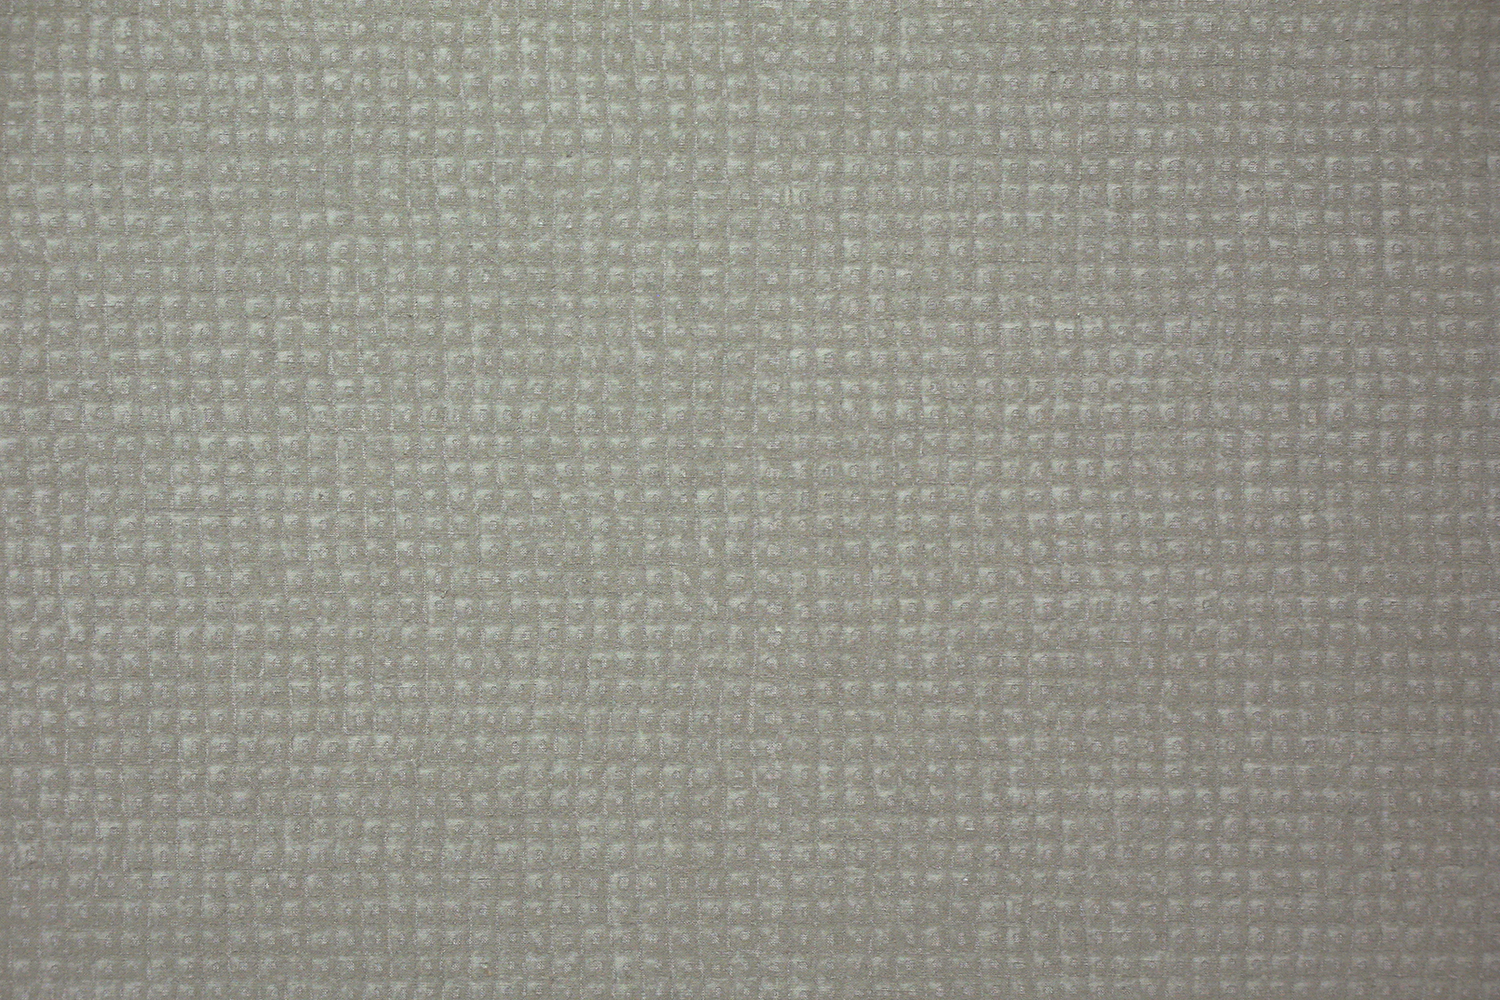 hemp drawing 10-12｜麻布ドローイング10-12, acrylic on raw canvas, 130 x 130 cm, 2010